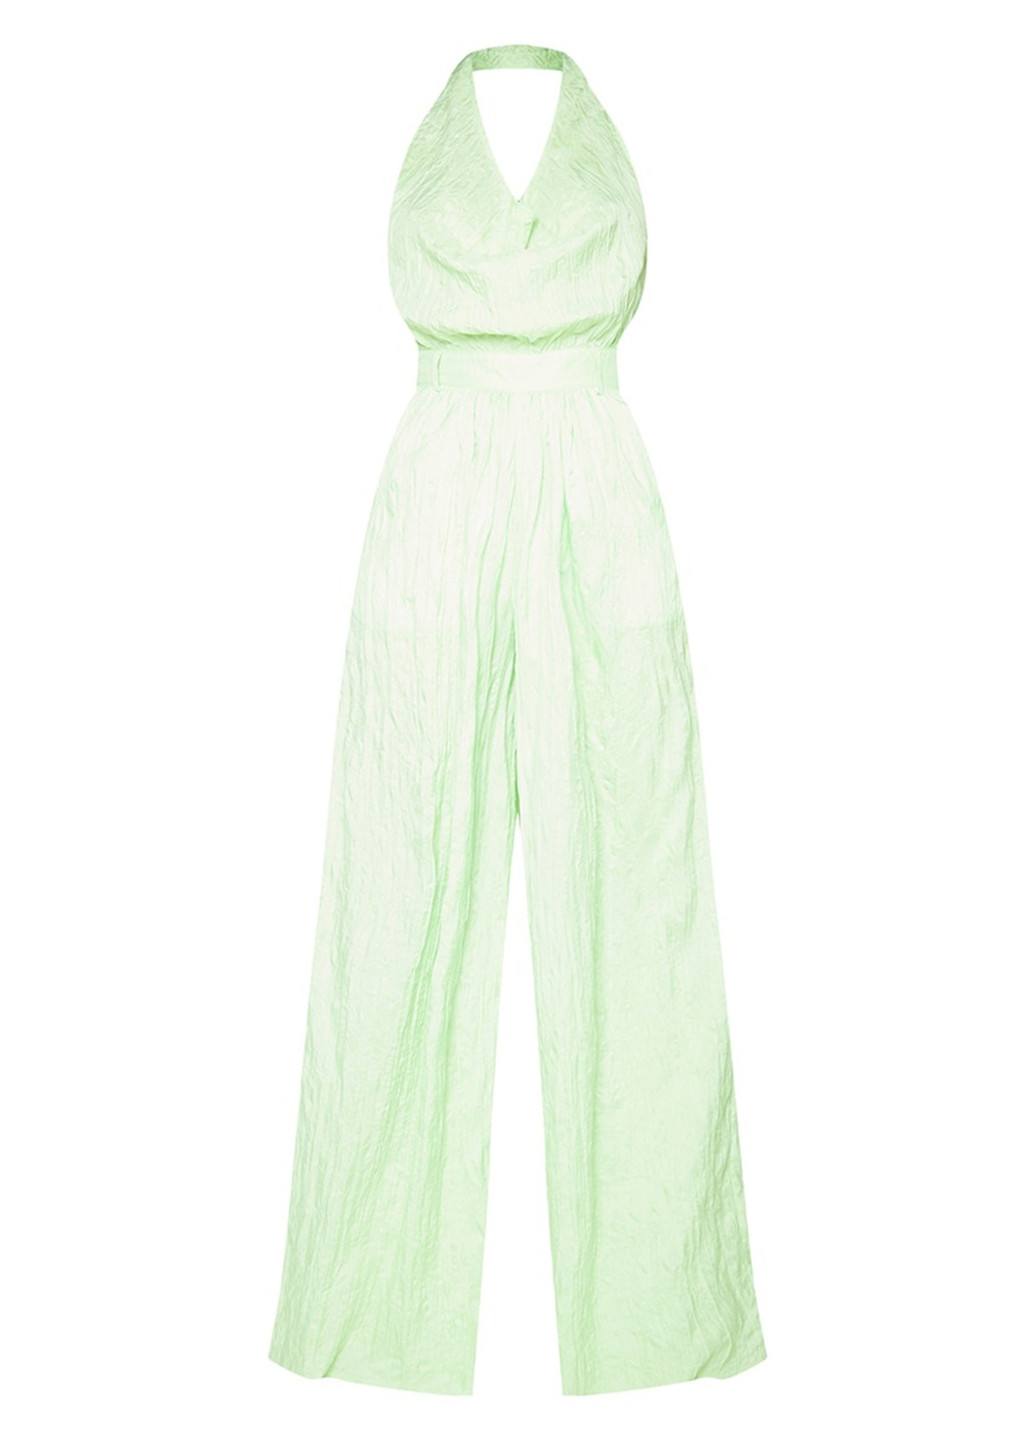 Комбинезон PrettyLittleThing комбинезон-брюки однотонный светло-зелёный кэжуал полиэстер